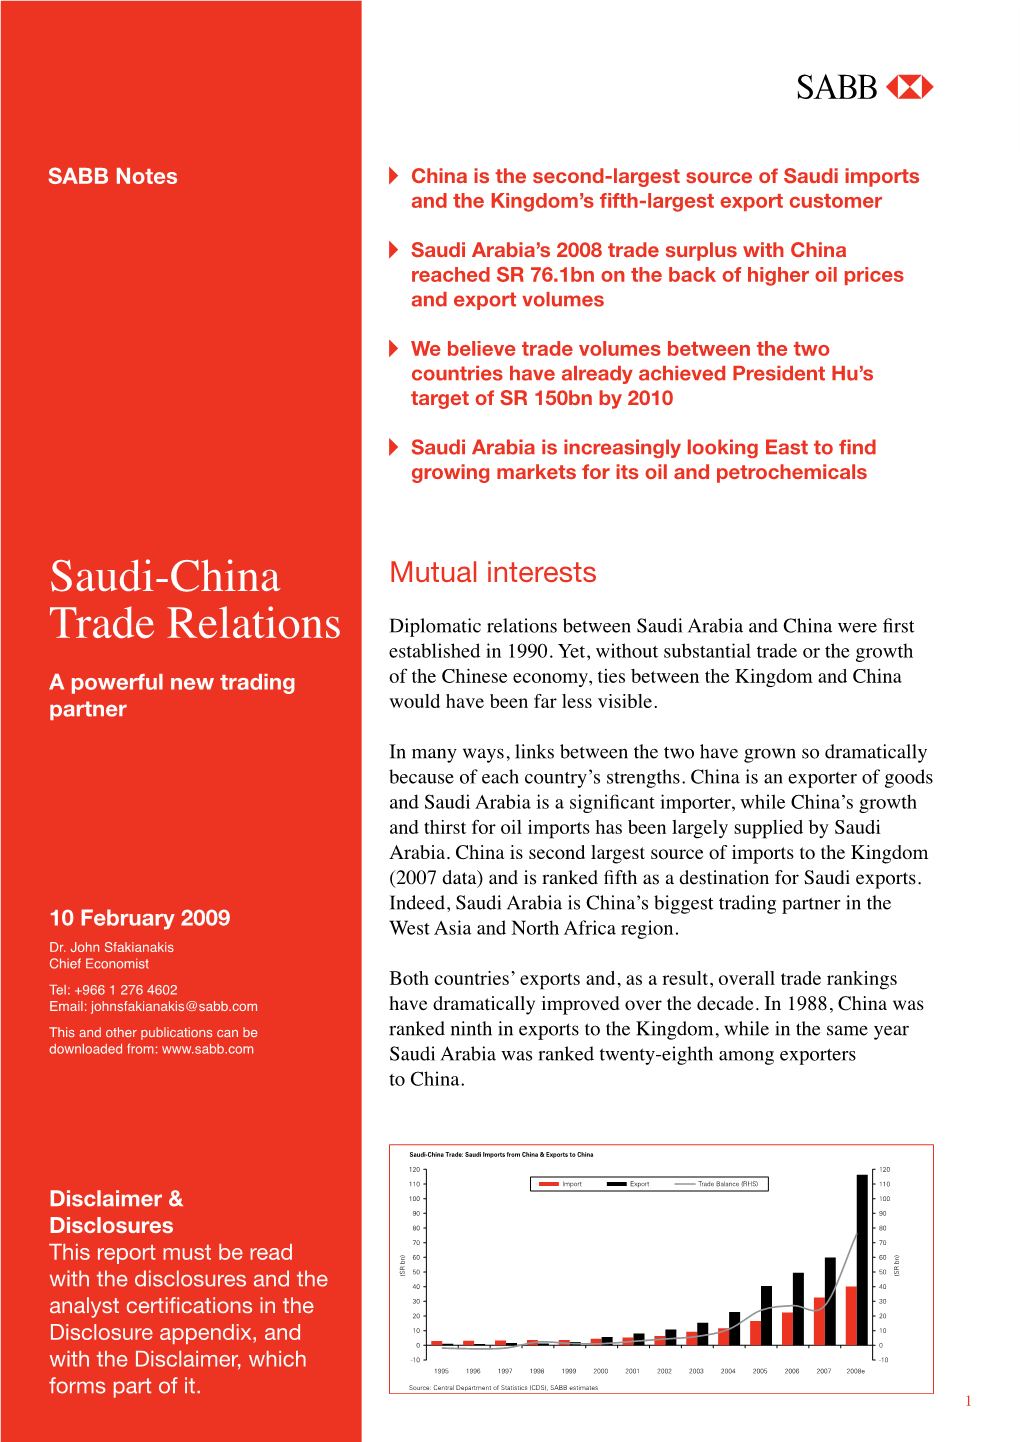 Saudi-China Trade Relations